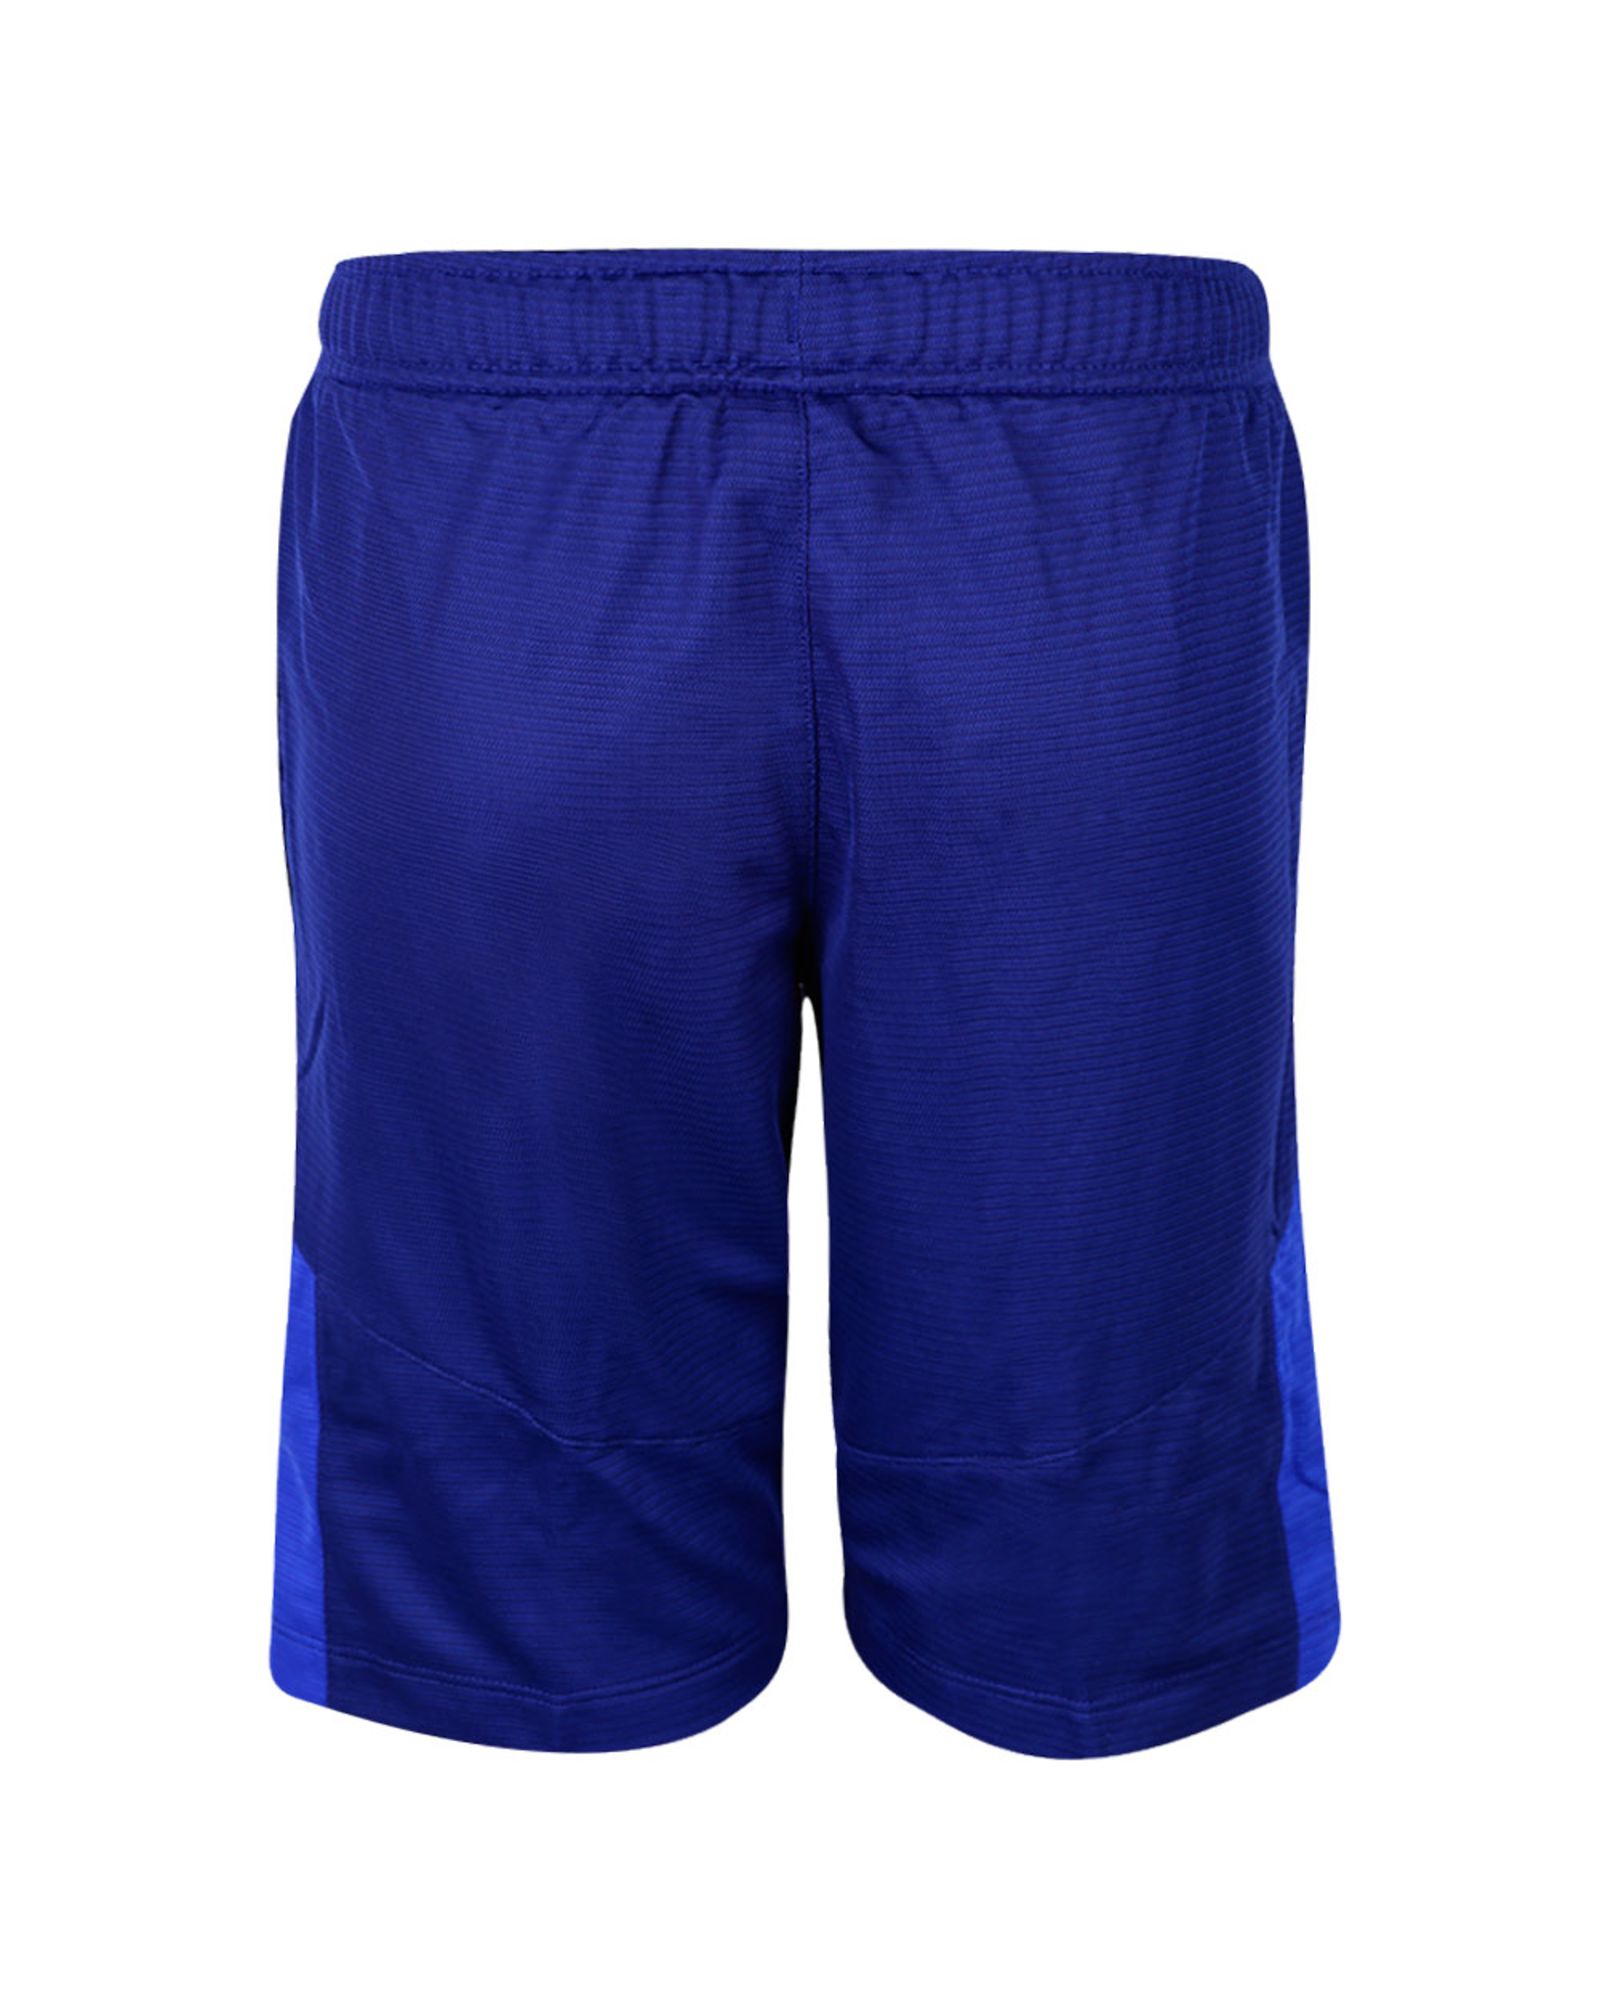 Pantalón de Training Dri-FIT Junior Azul - Fútbol Factory